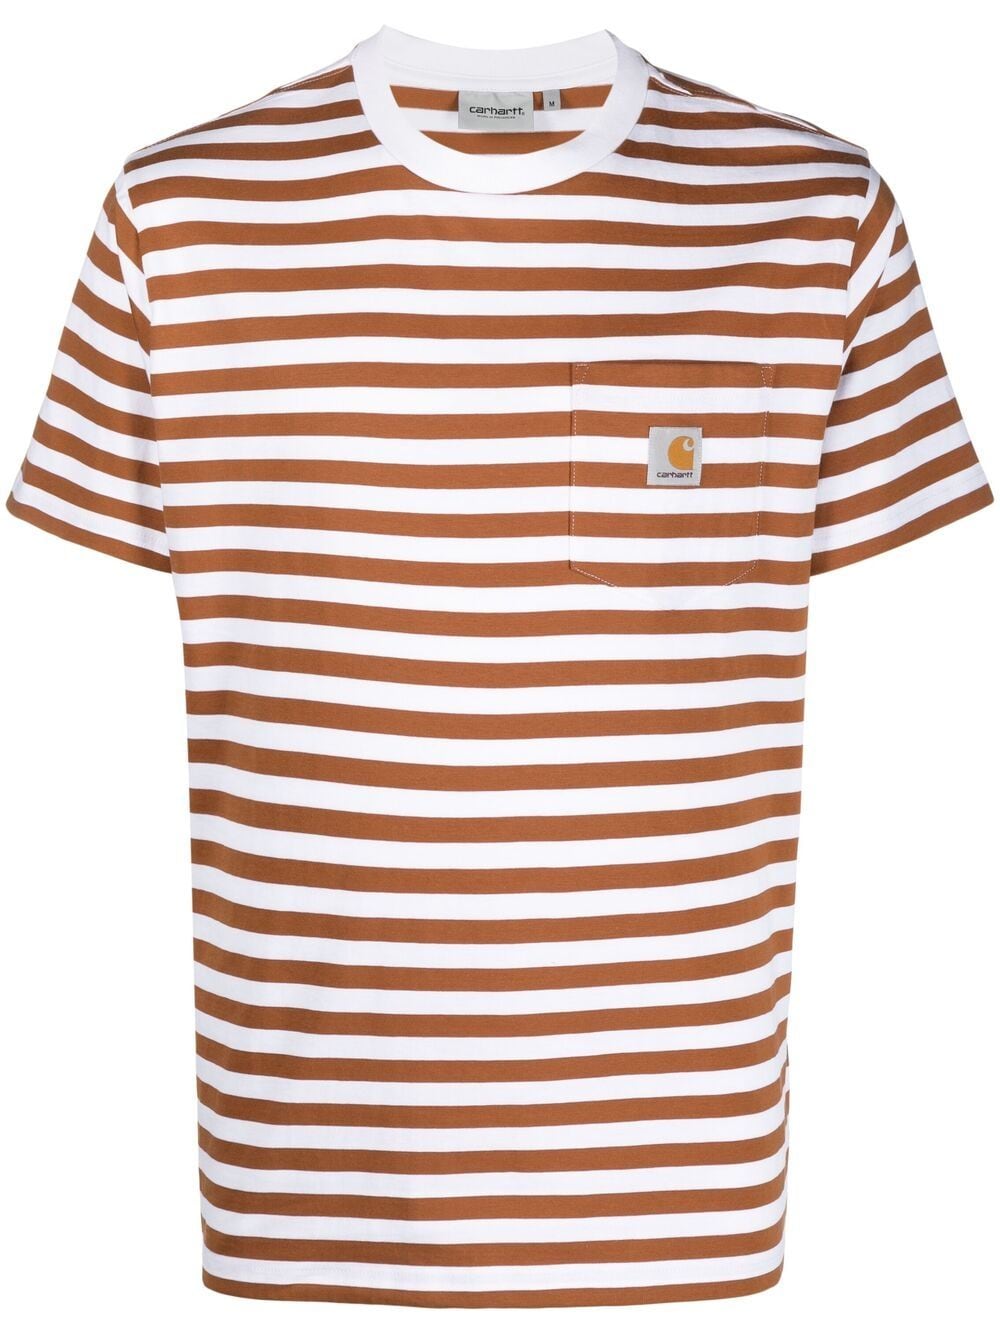 Carhartt Striped Cotton T-shirt In Brown